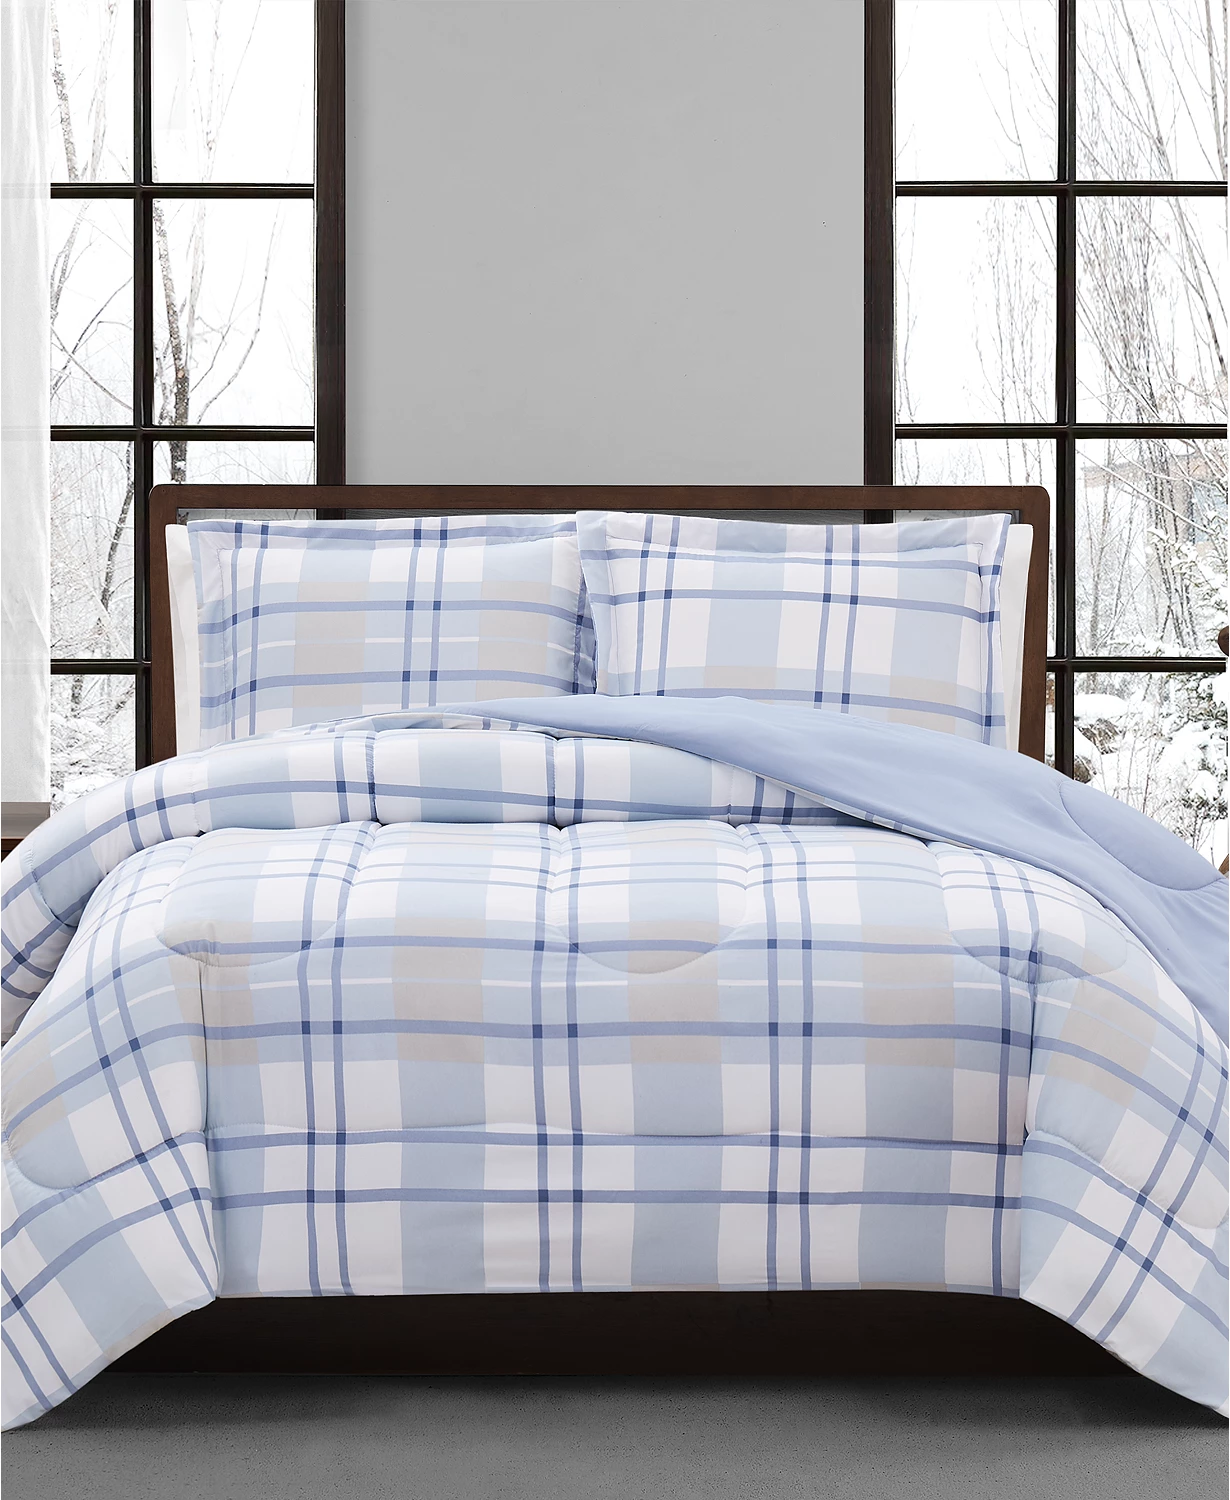 2-Piece Aaron Reversible Comforter Set in Twin size for $11.96